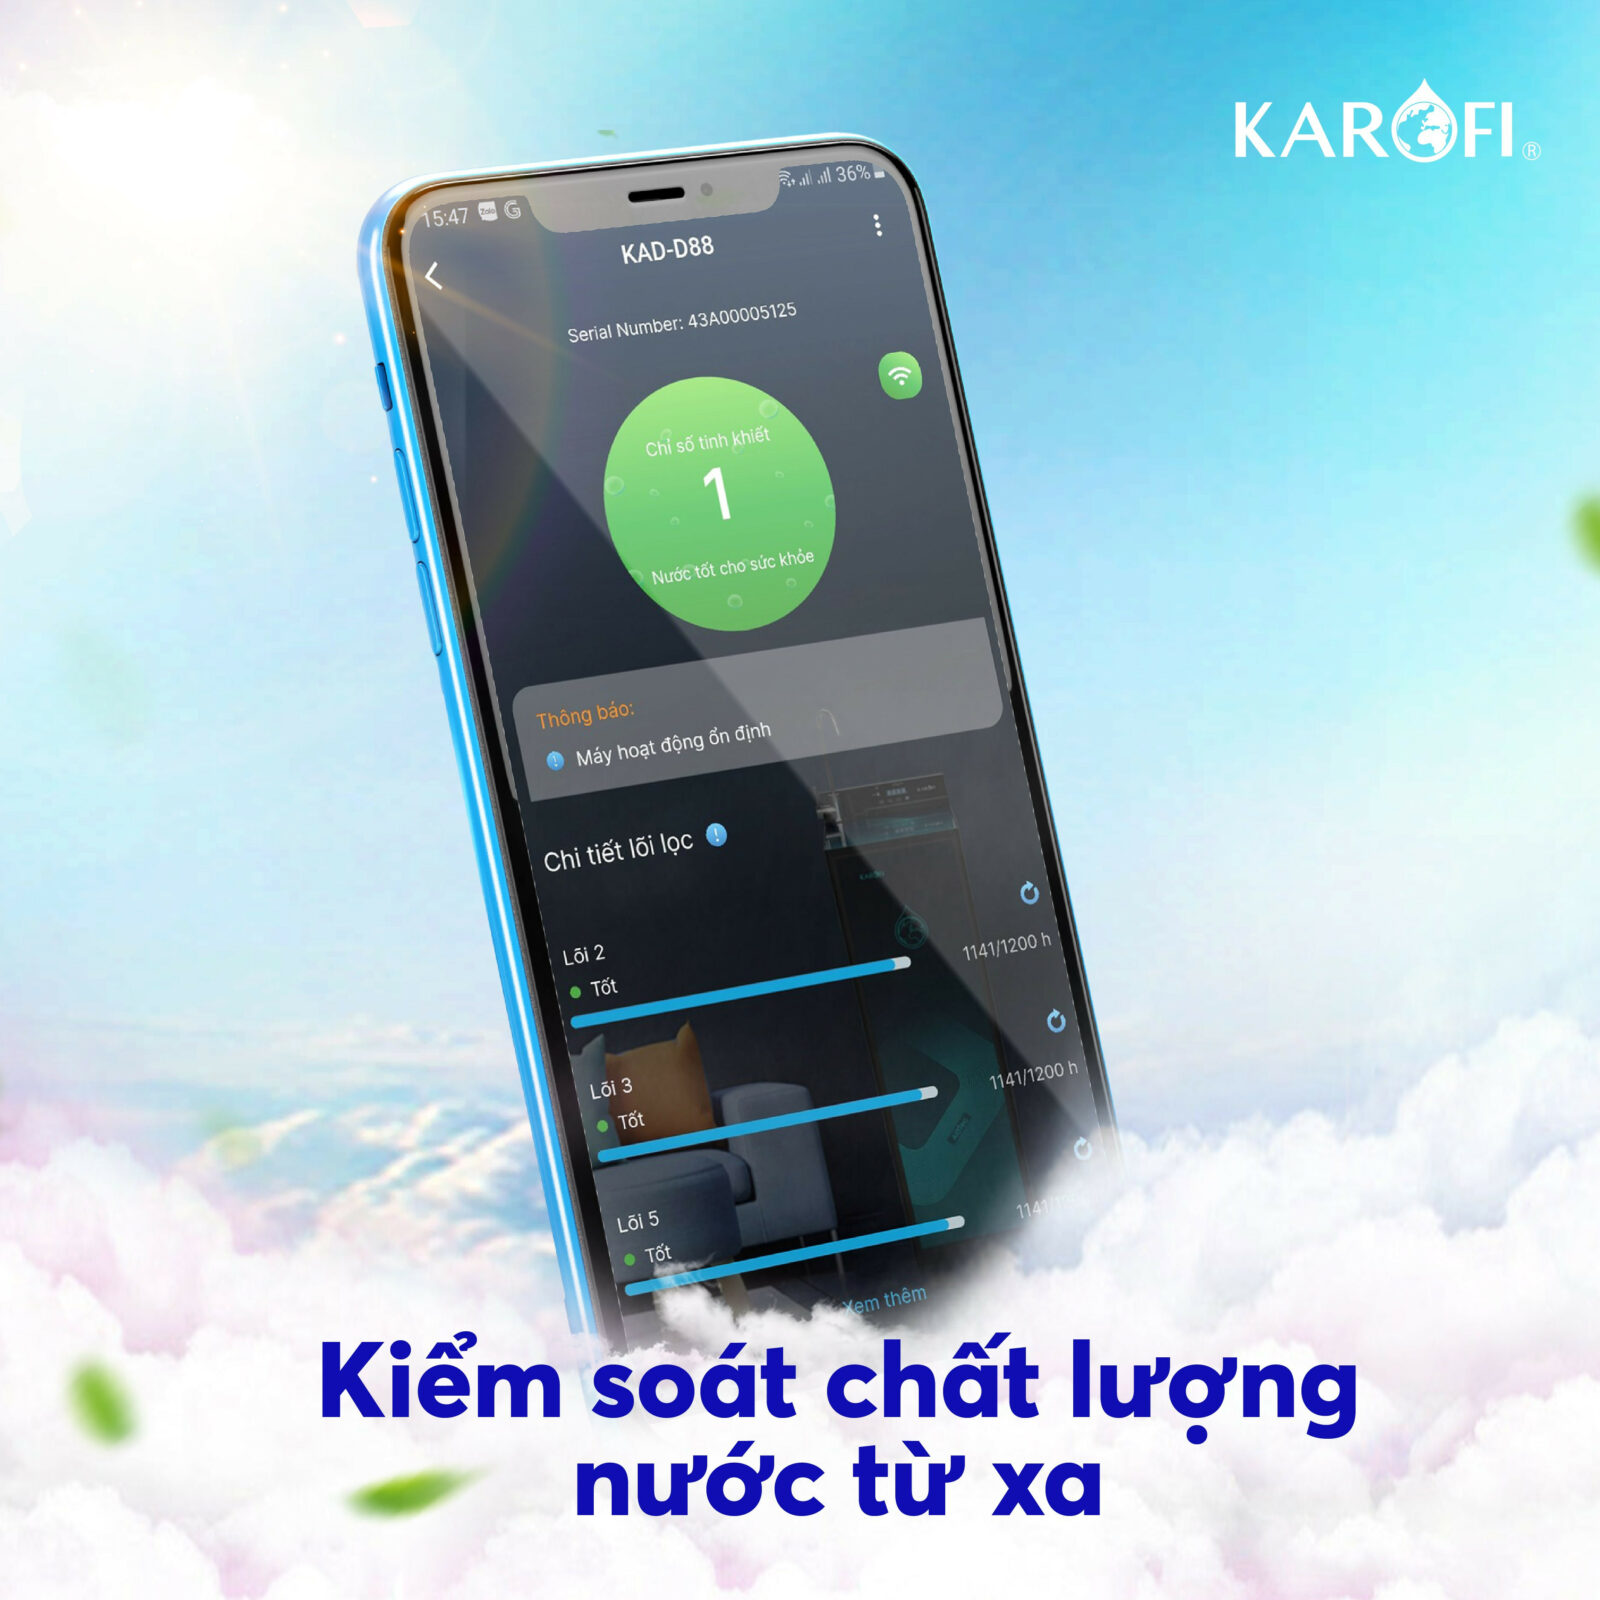 an-tam-song-khoe-kiem-soat-chat-luong-nuoc-va-khi-tren-app-karofi-365-thong-minh-1